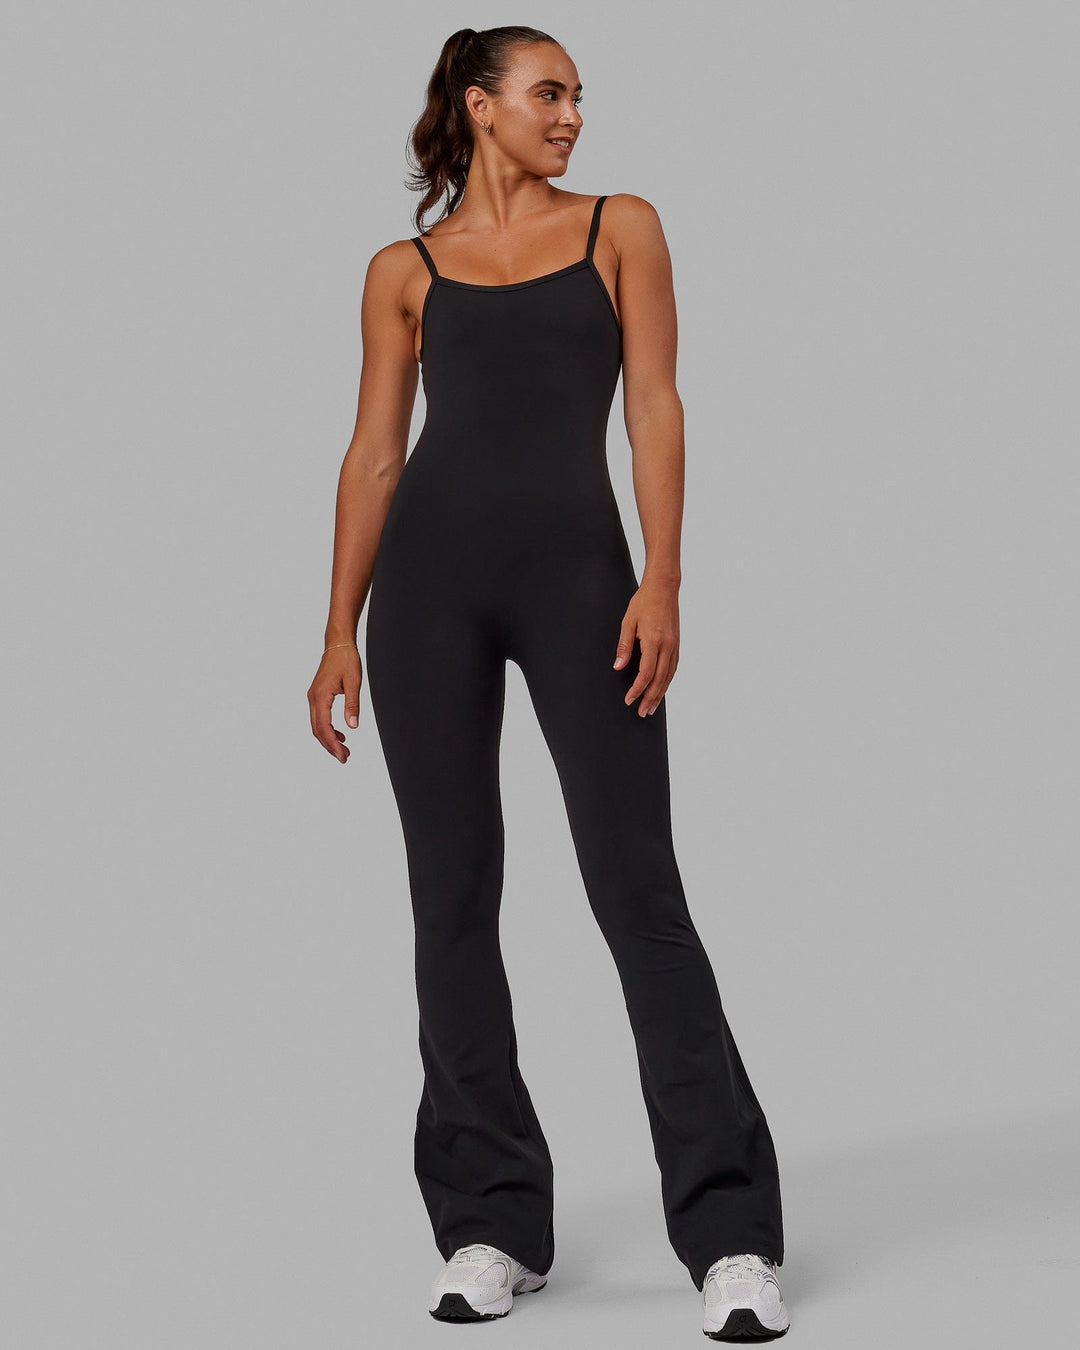 Woman wearing Clarity Full Length Bodysuit - Black